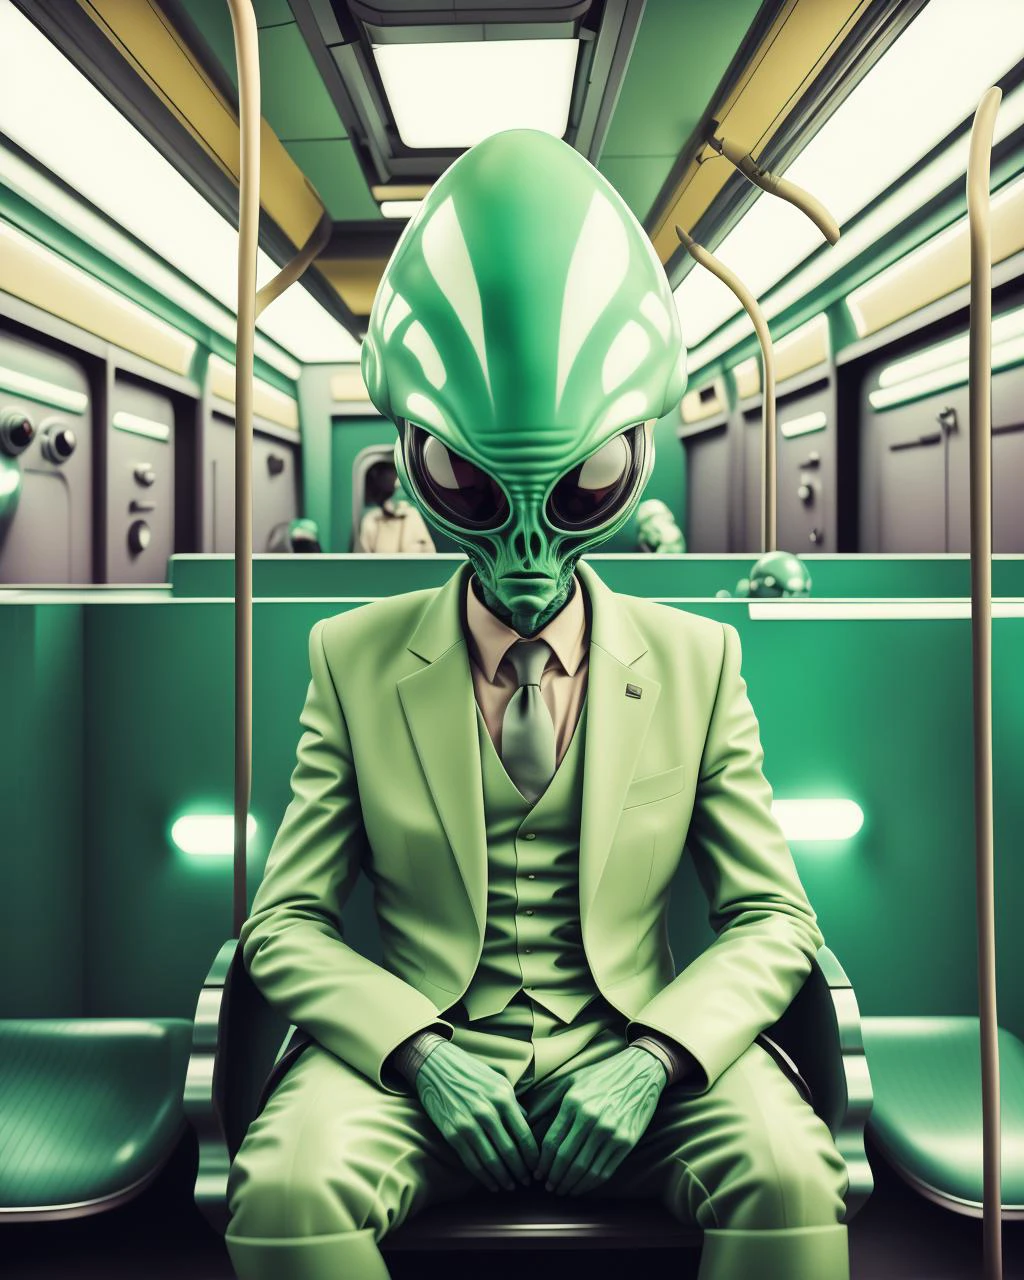 мужчина в зеленом костюме сидит в поезде